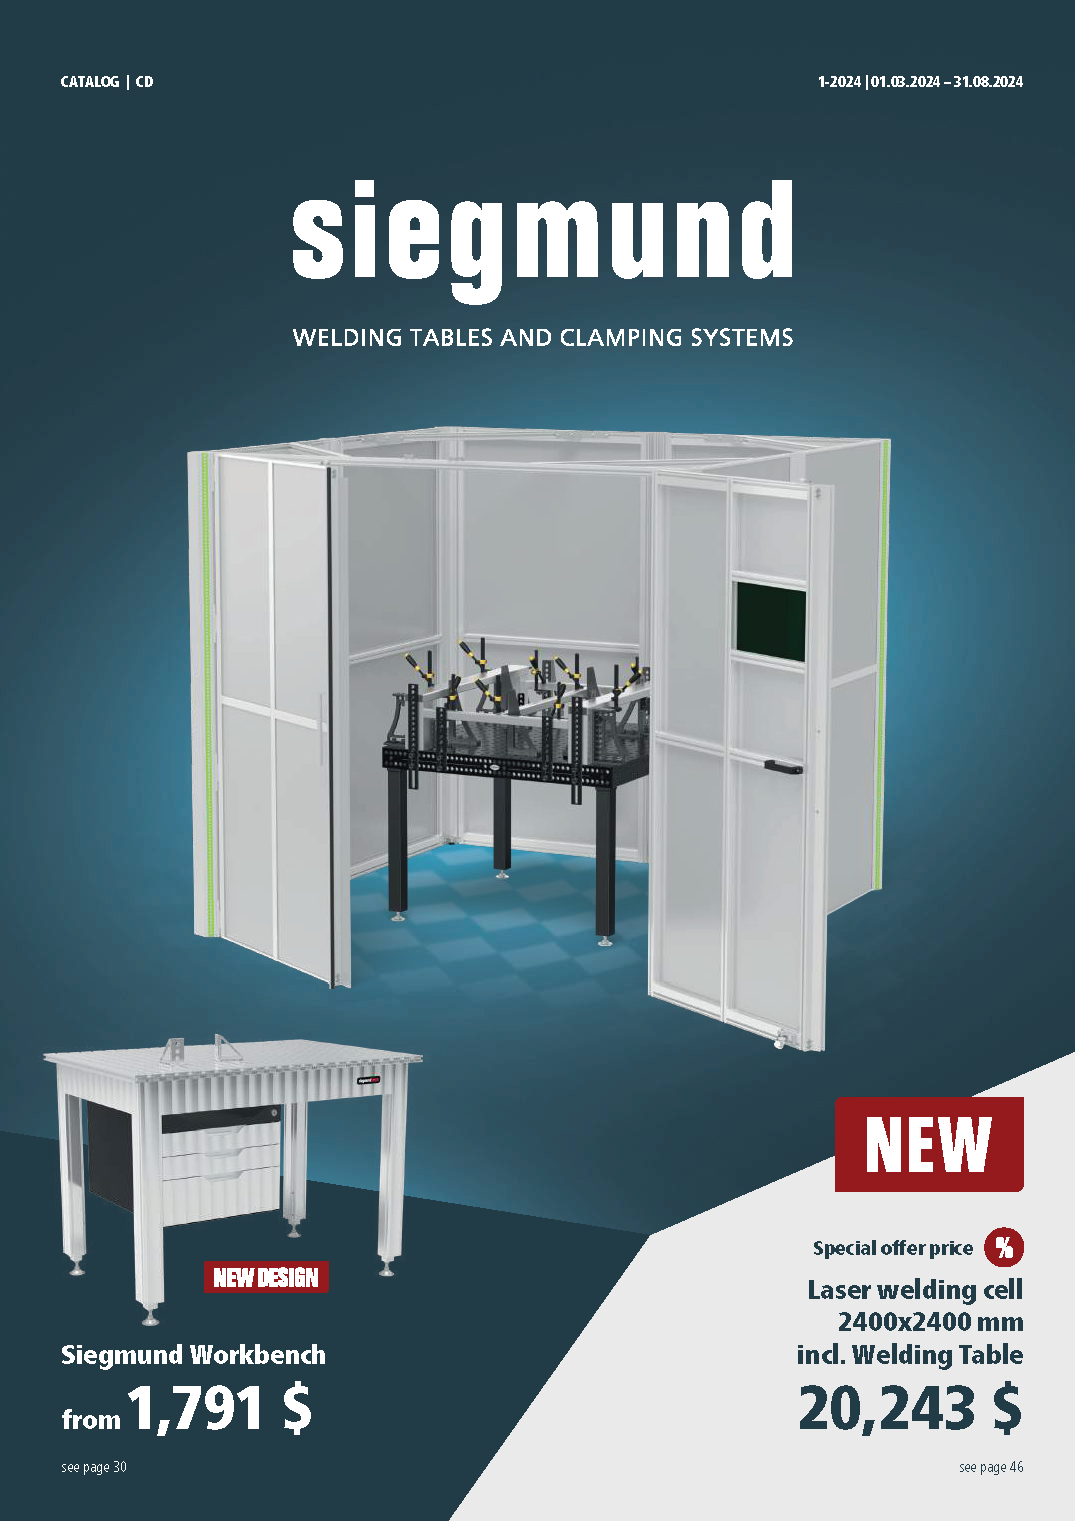 Siegmund Welding Tables - Welding Supply for Canada